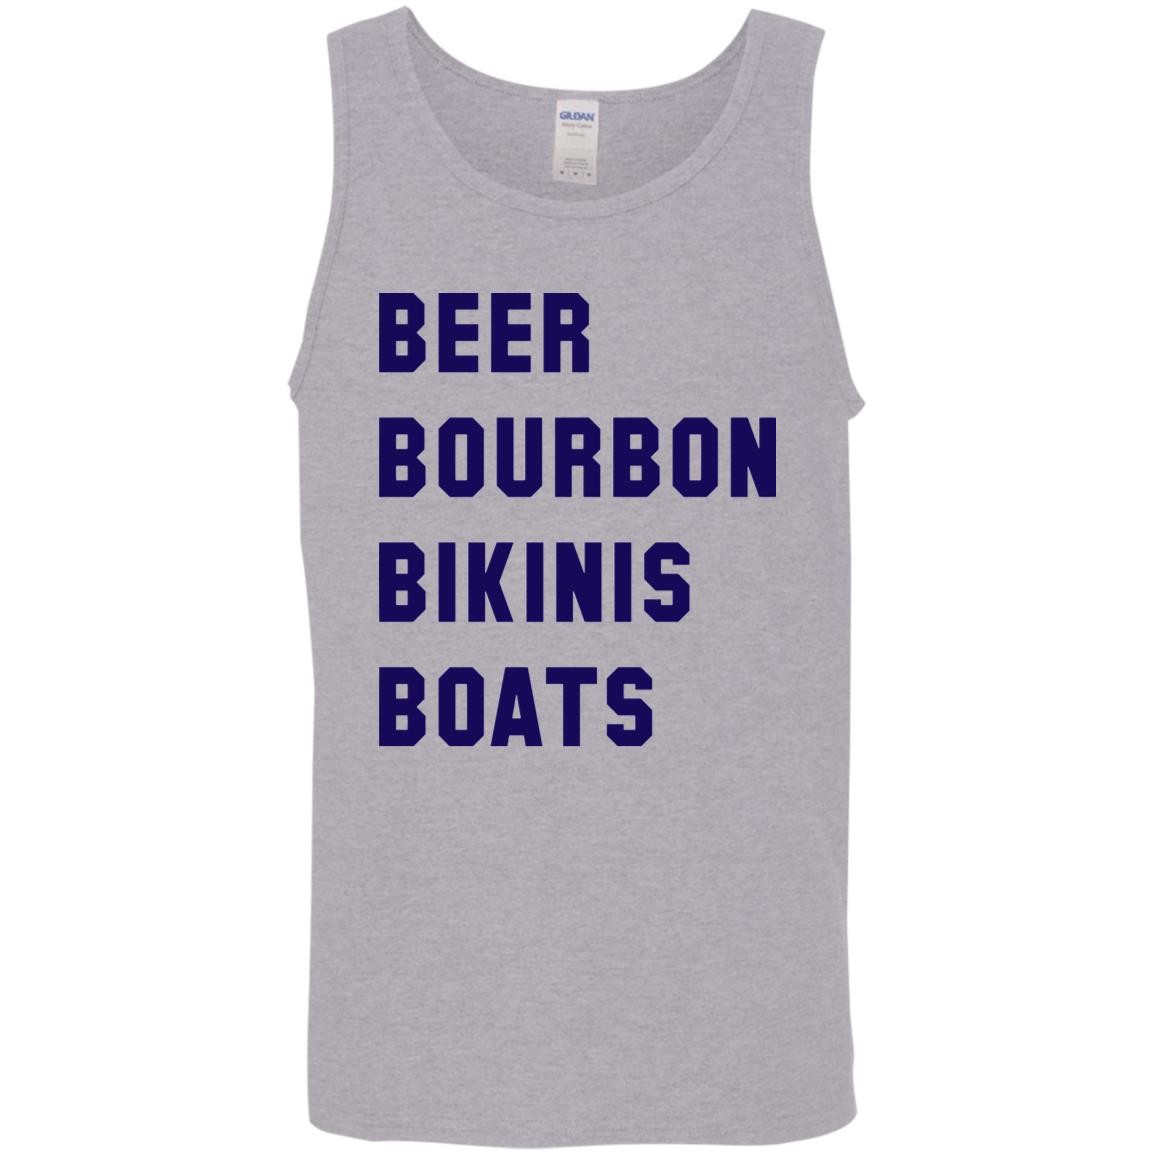 ***2 SIDED***  HRCL FL - Navy Beer Bourbon Bikinis Boats - 2 Sided G520 Cotton Tank Top 5.3 oz.